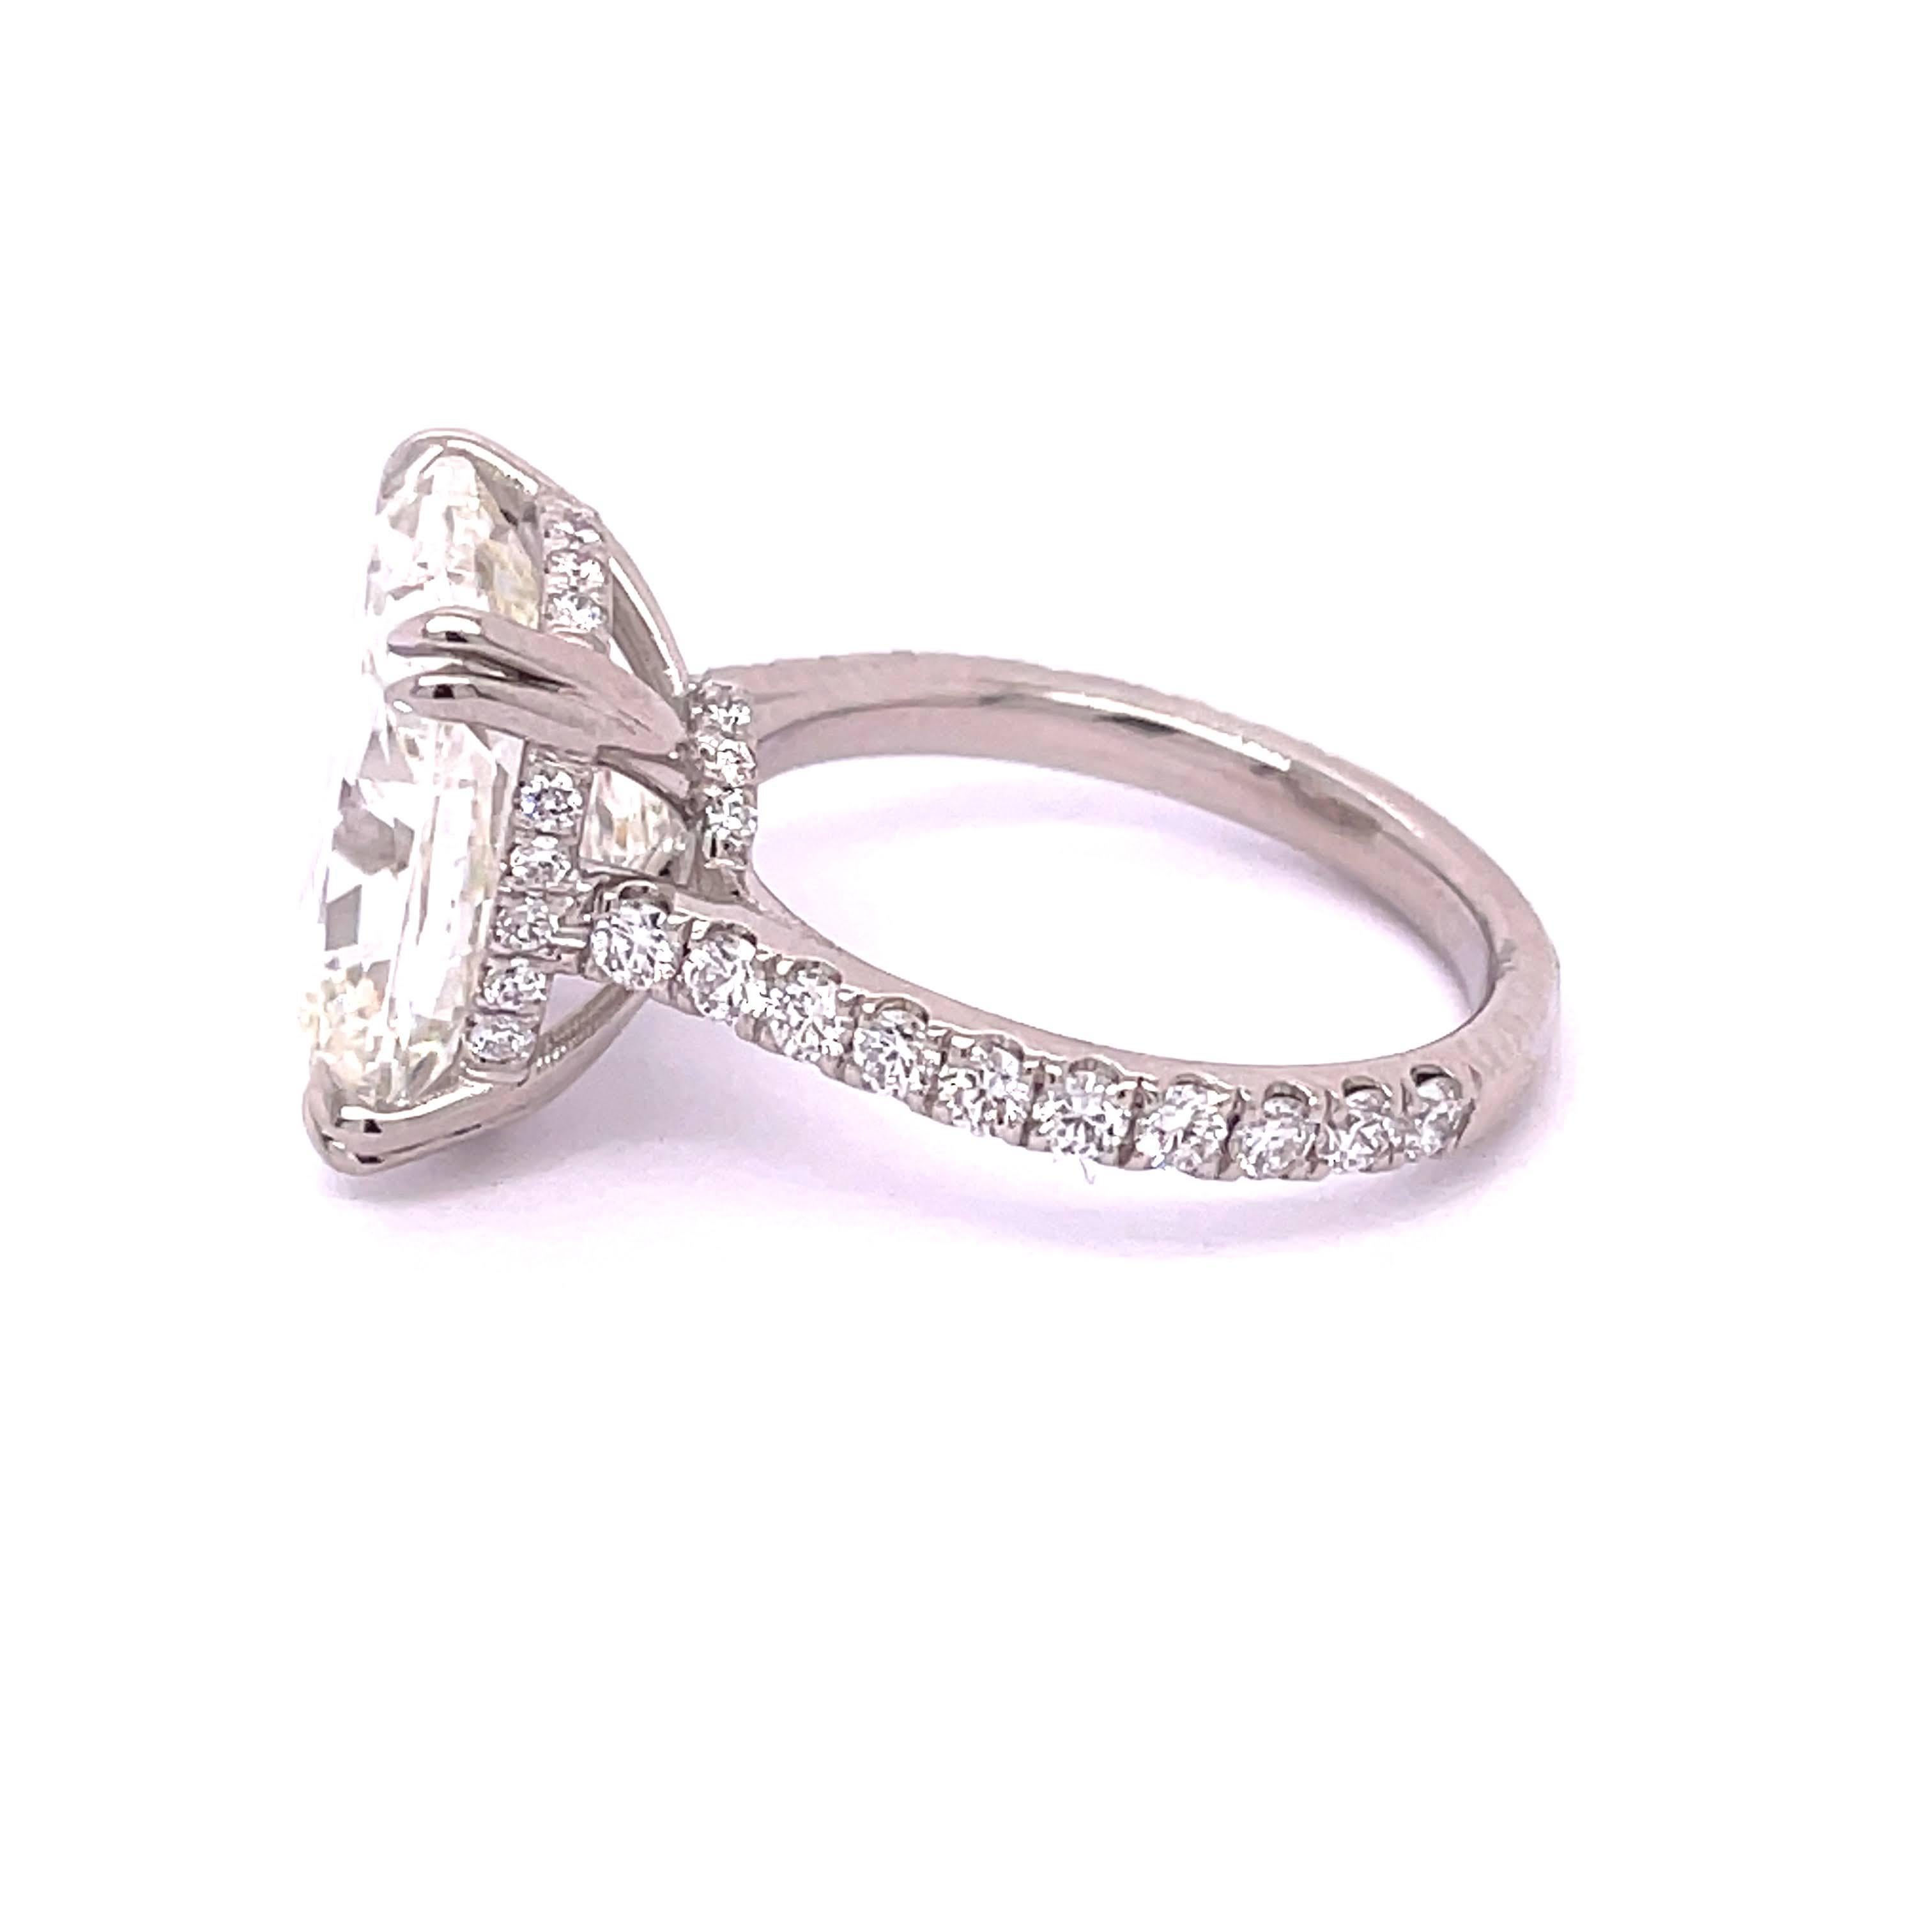 Cushion Cut GIA Certified 8.58 Carat Cushion Shape Diamond Engagement Ring      